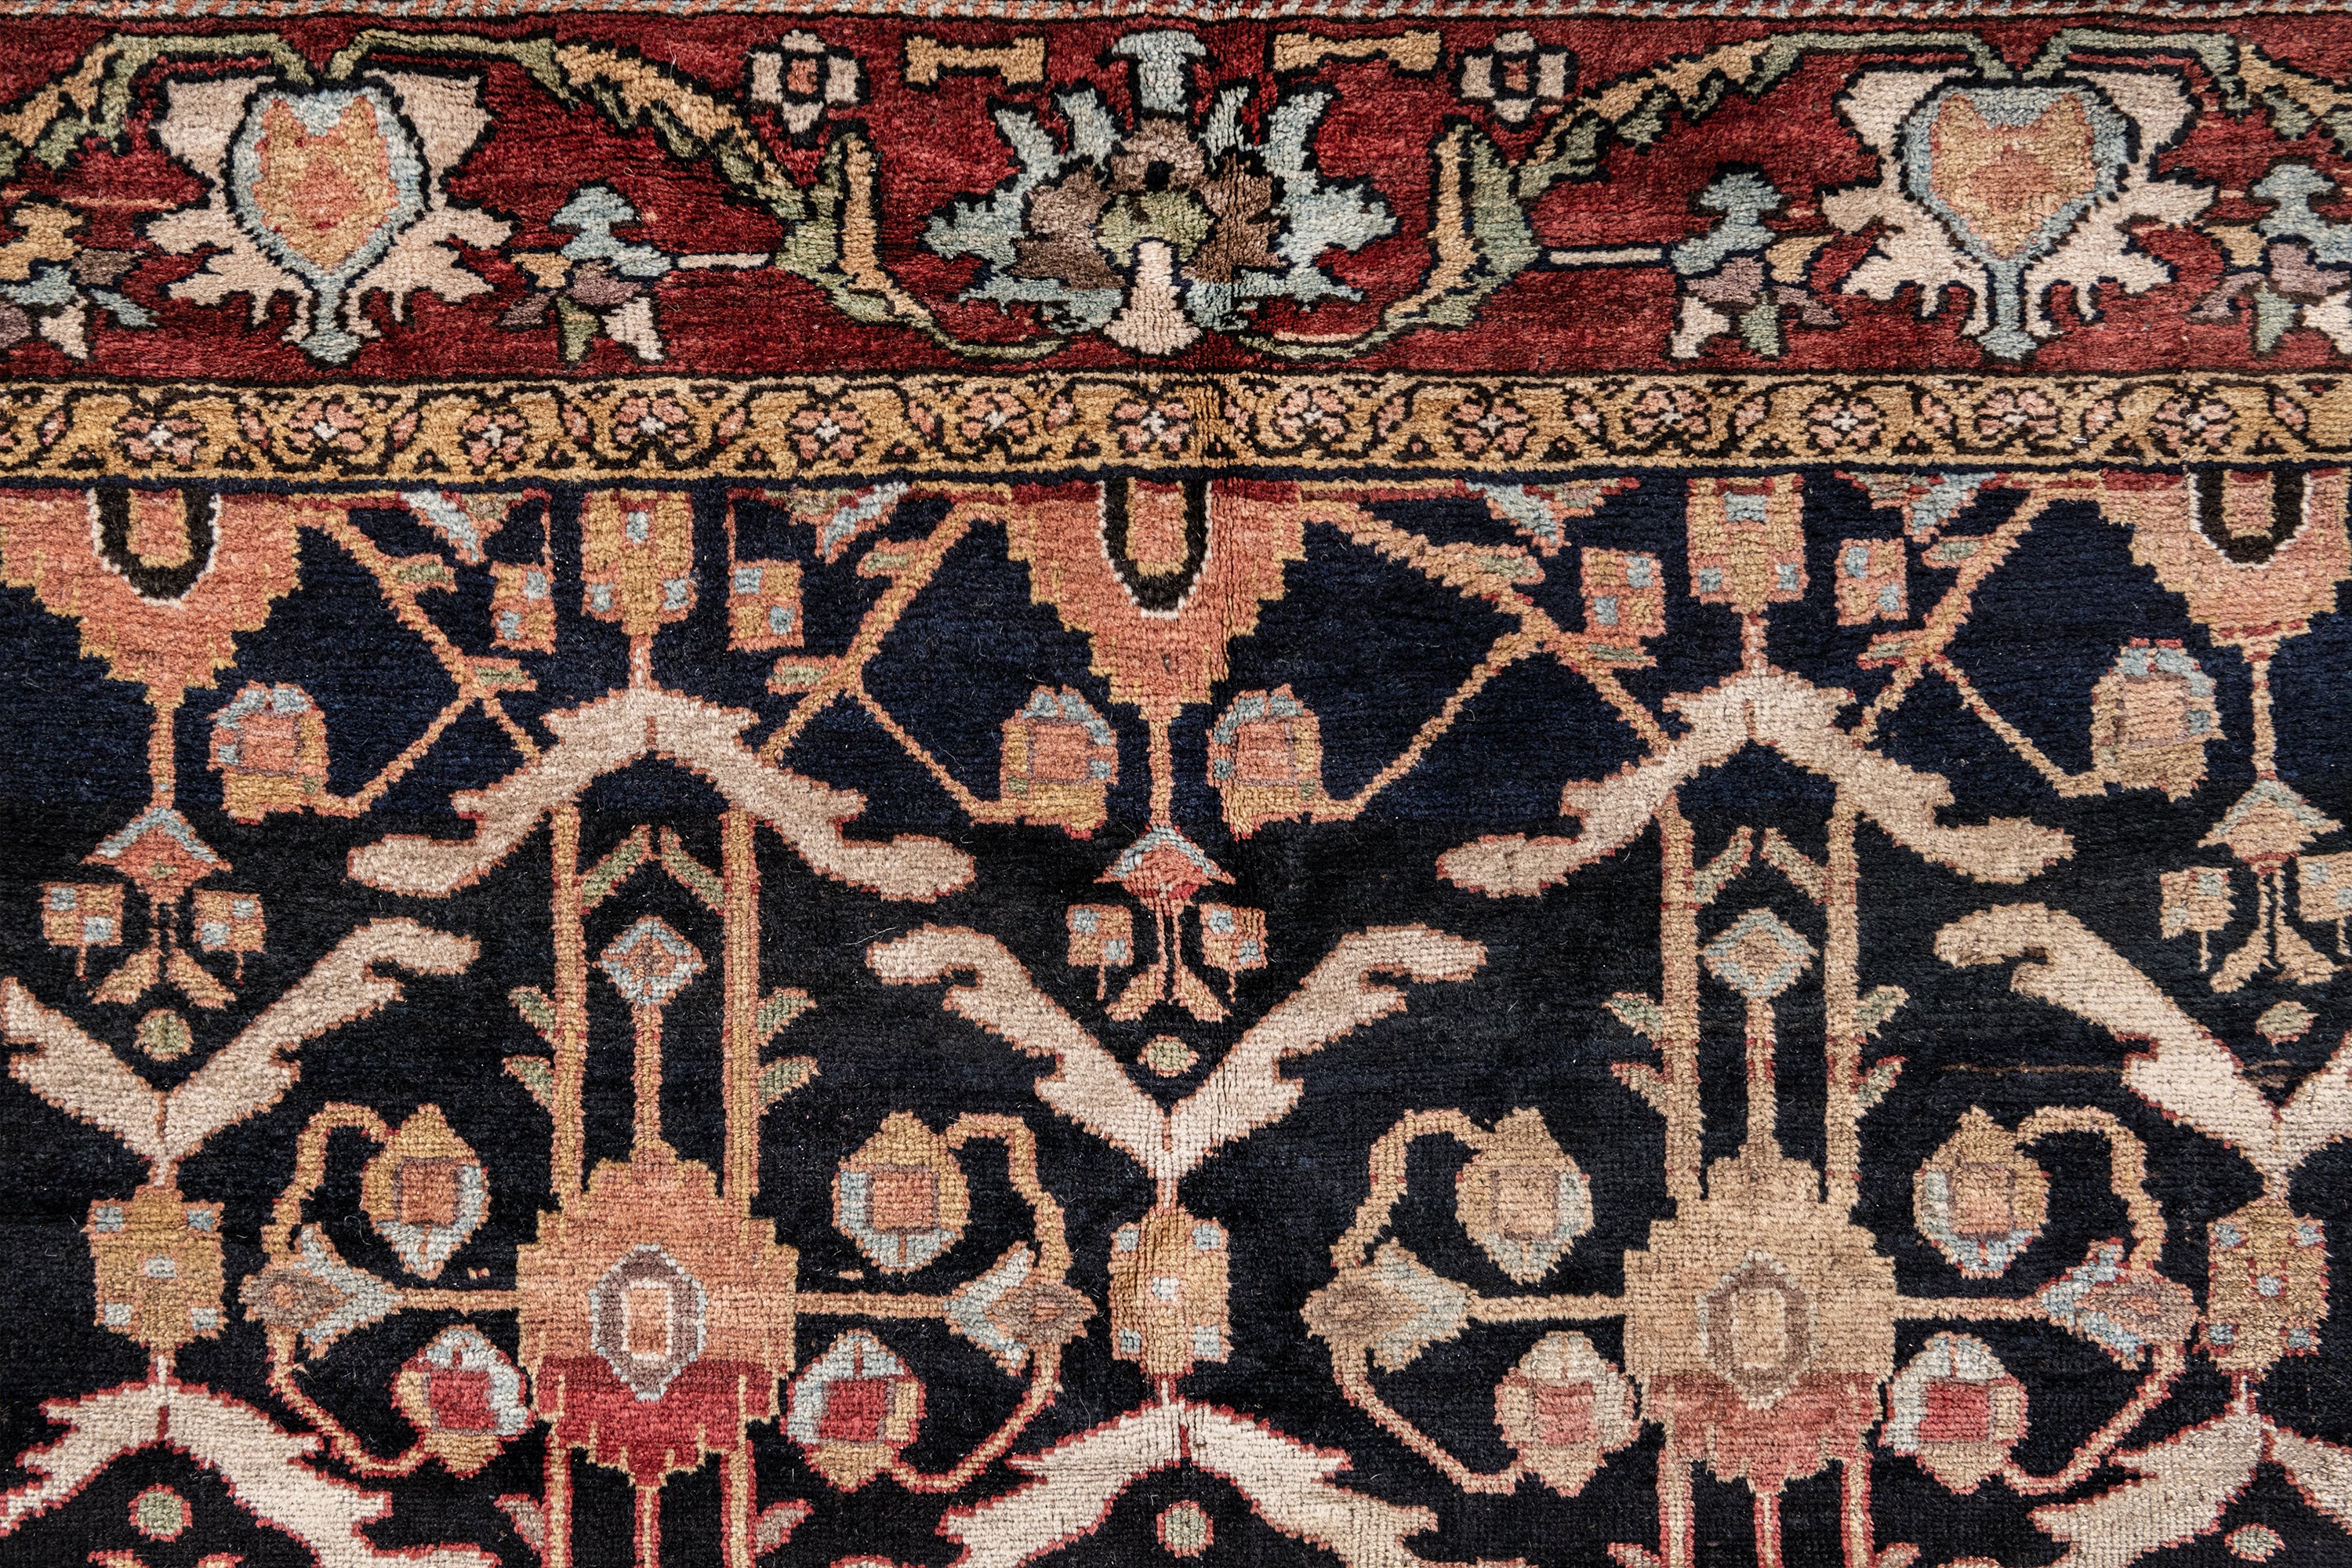 Kurdish rug, AR31280, WEST PERSIA, 6' 9" x 11' 3" - thumbnail 6